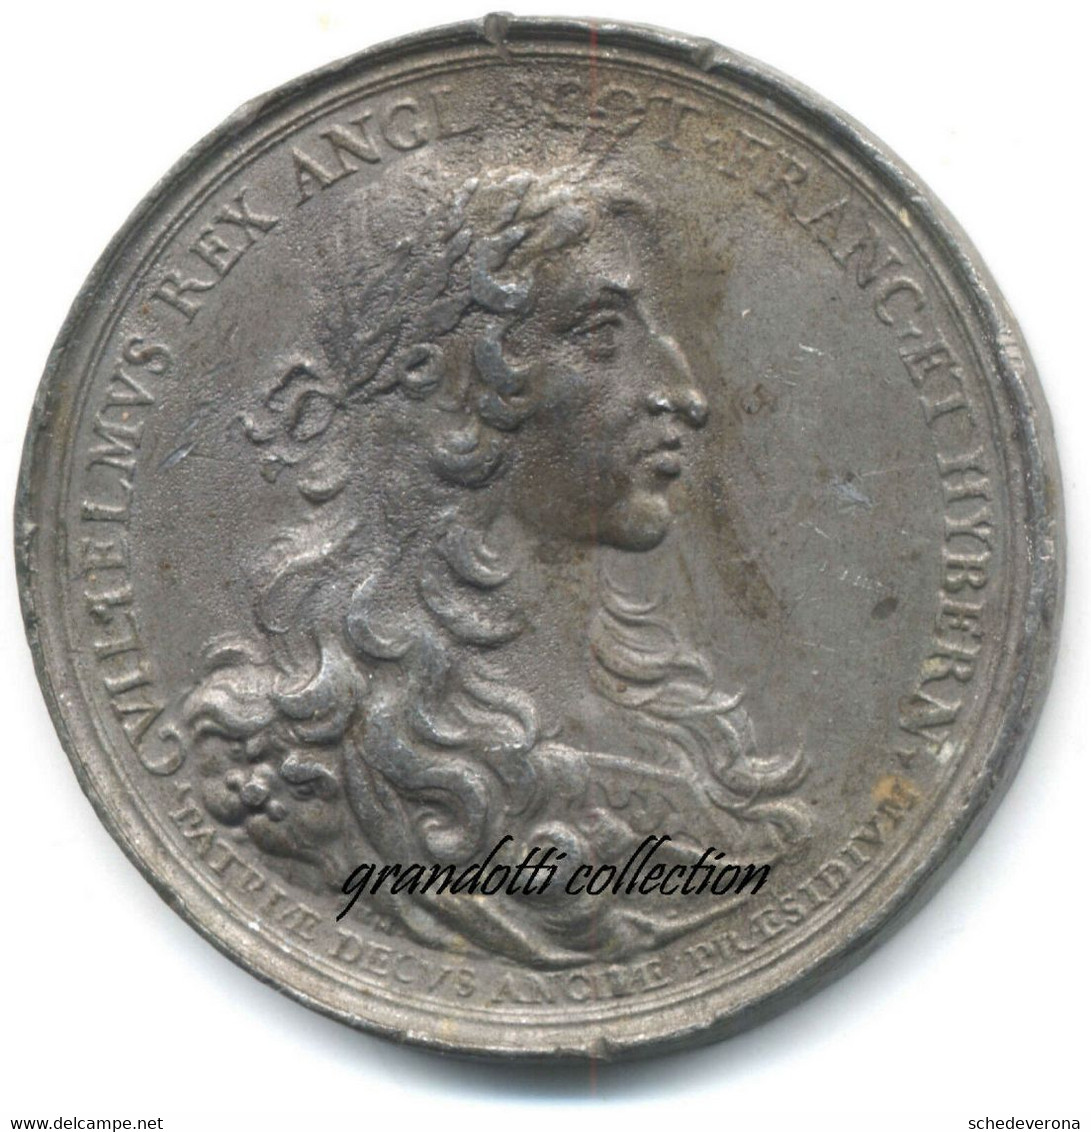 GUGLIEMO III INGHILTERRA 1689 BRITANNIA RESTITUITA MEDAGLIA MÜLLER - Royal/Of Nobility